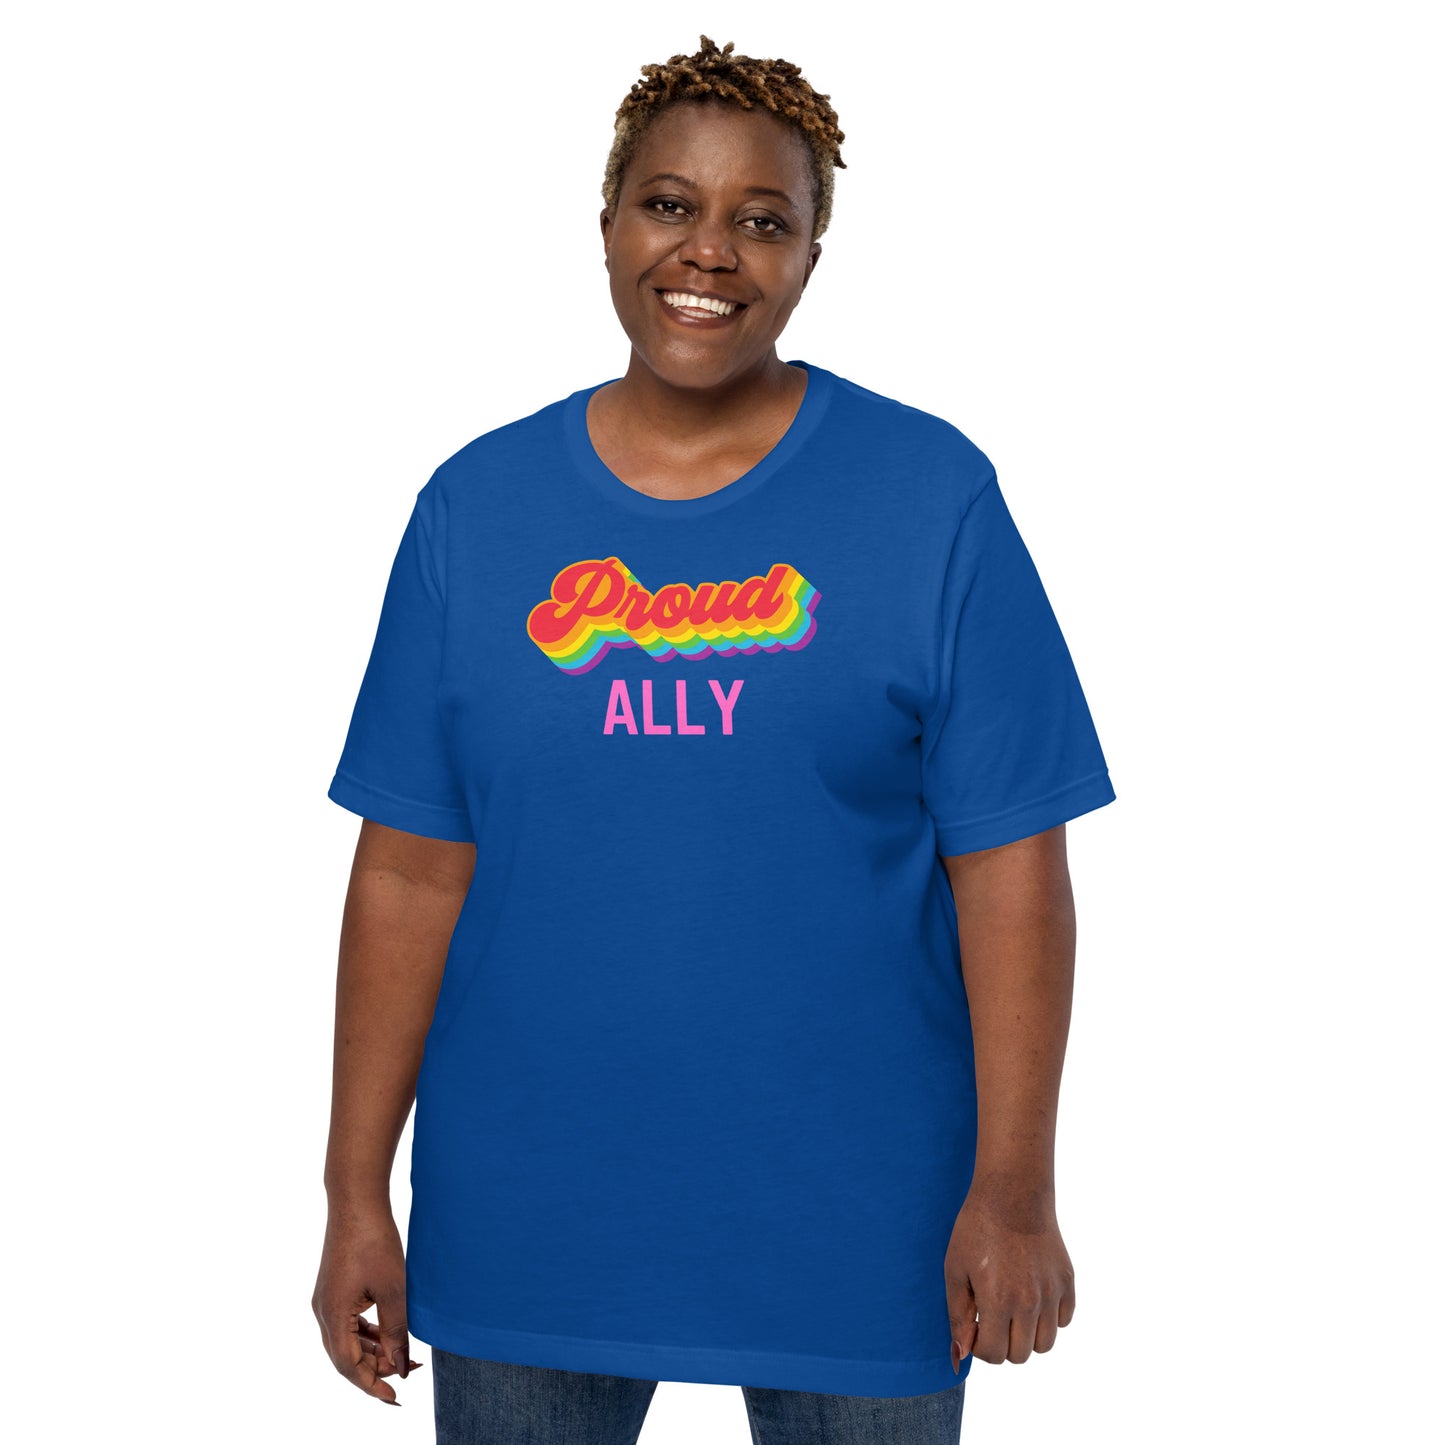 "Proud Ally" unisex t-shirt